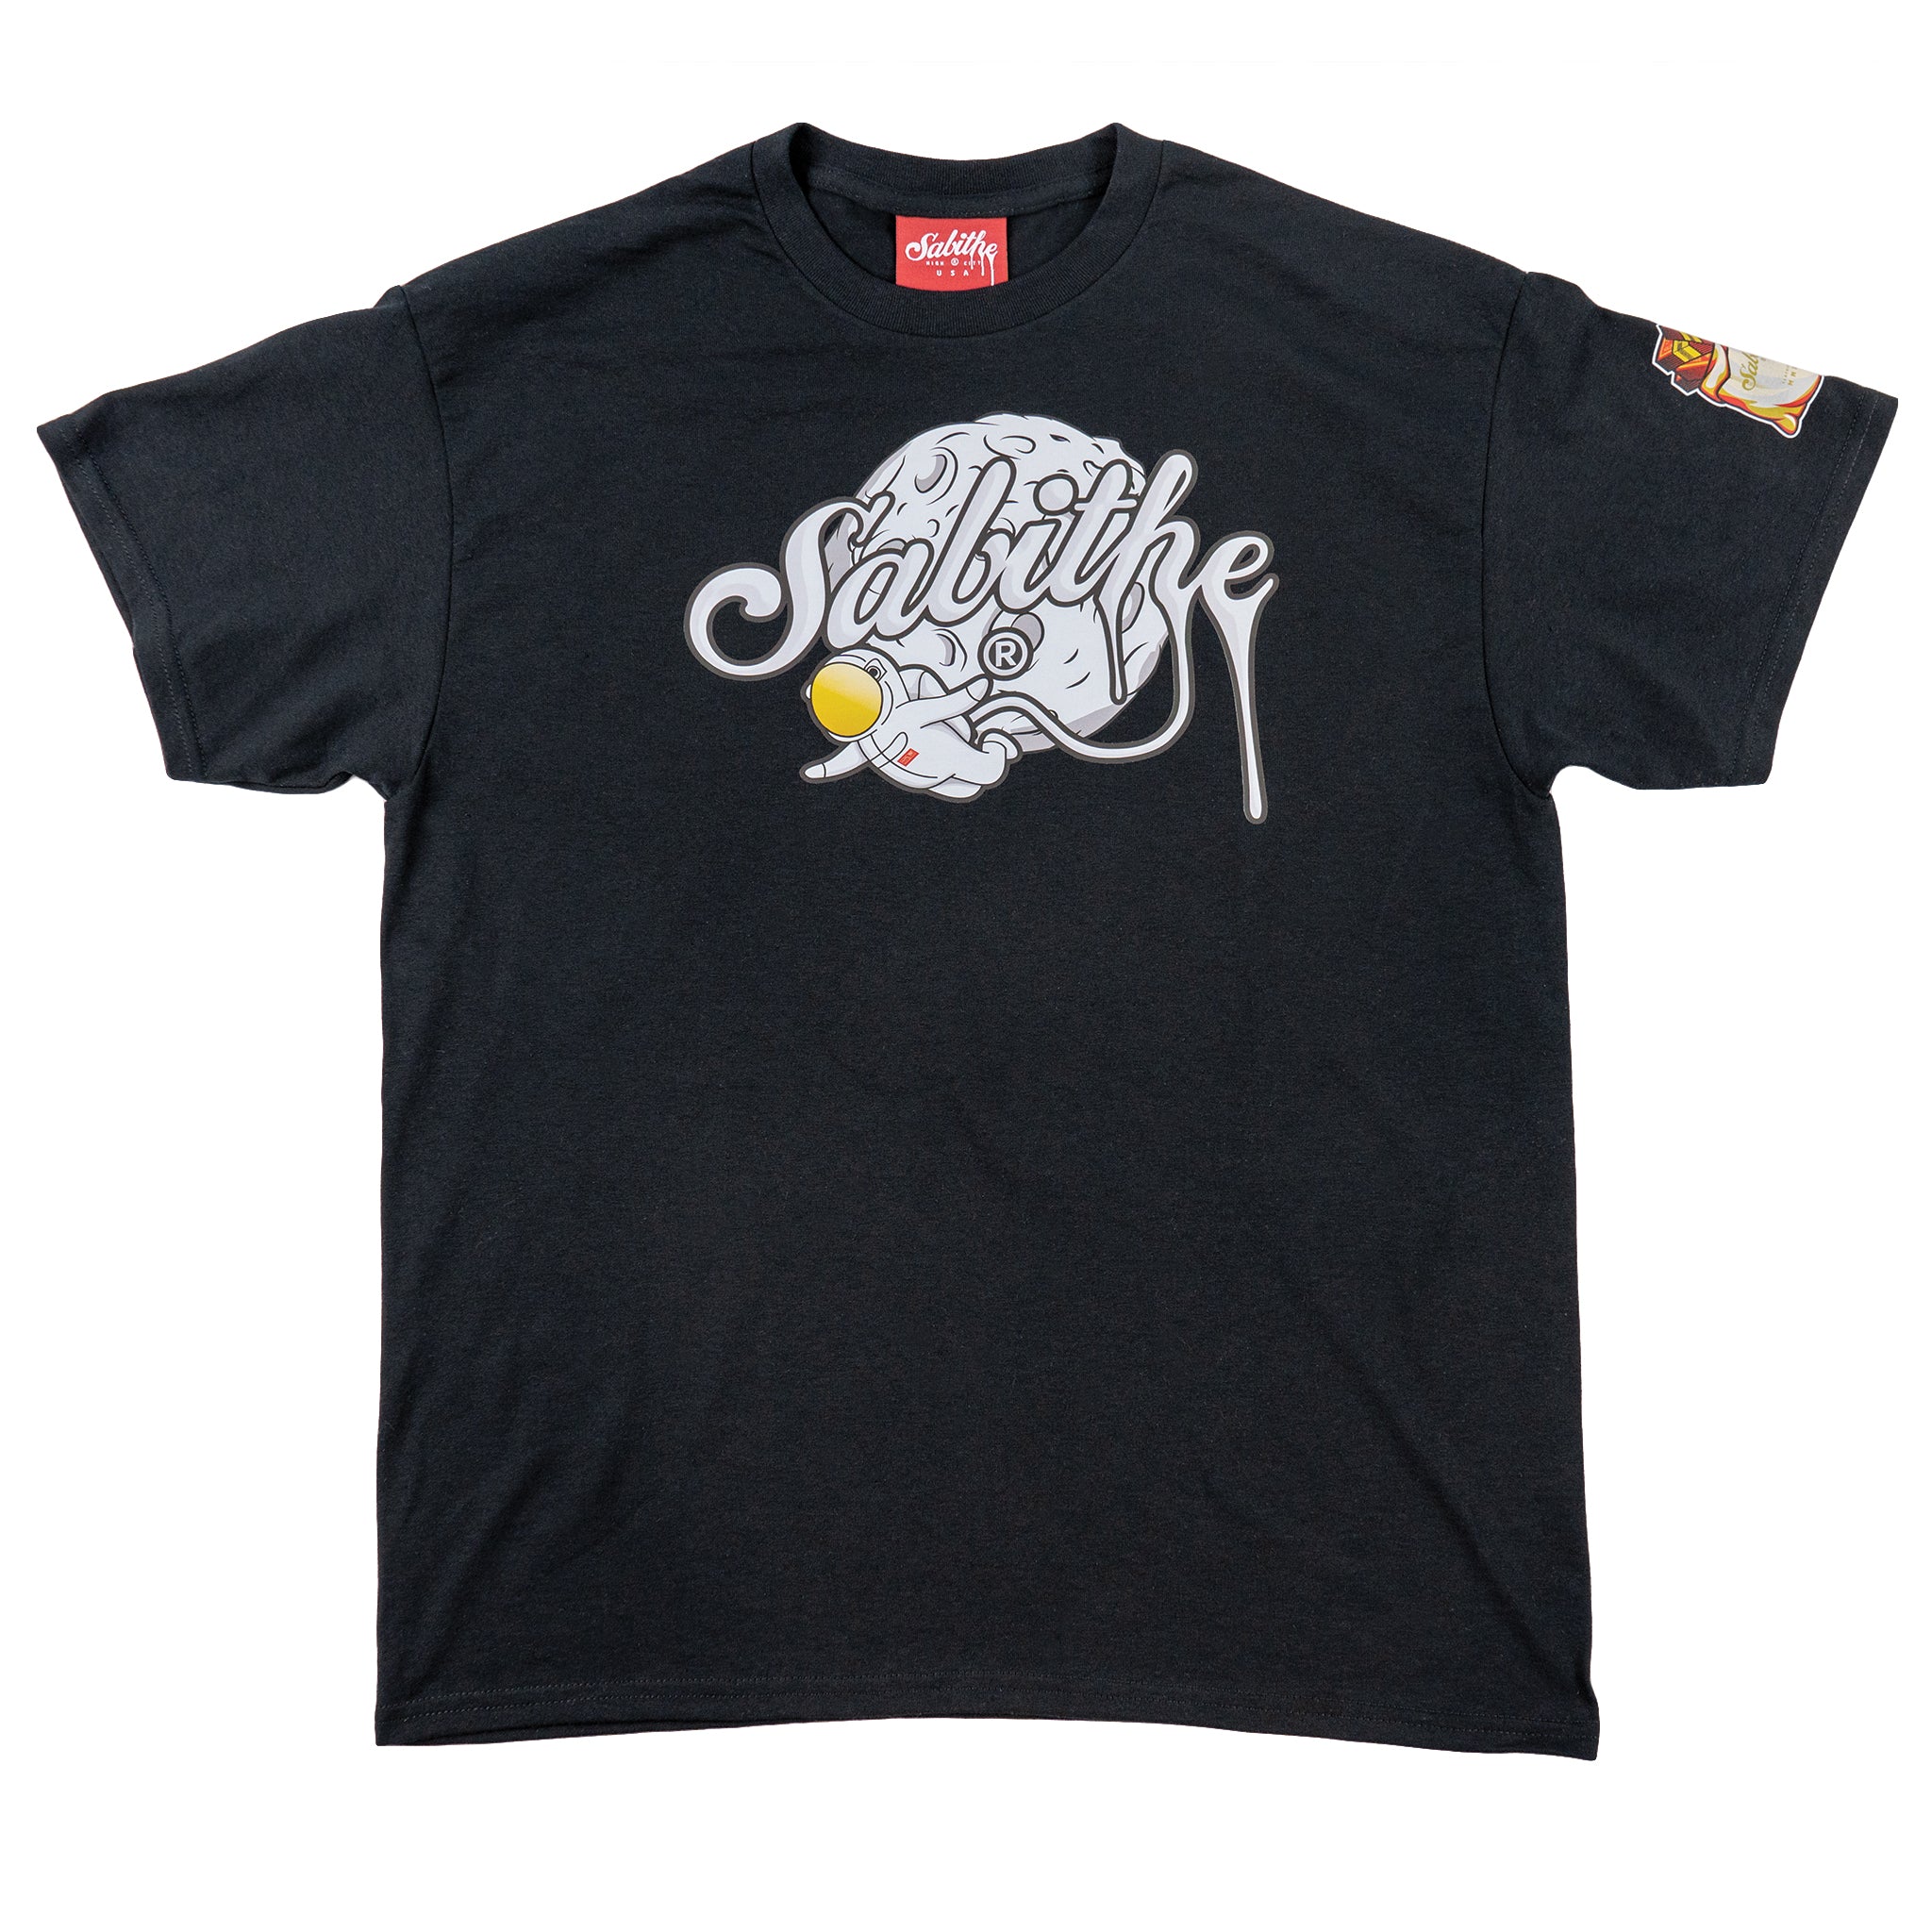 Black ASTRO Shirt, With Our main Logo alongside a Small Astronaut. 50/50 blend Shirt